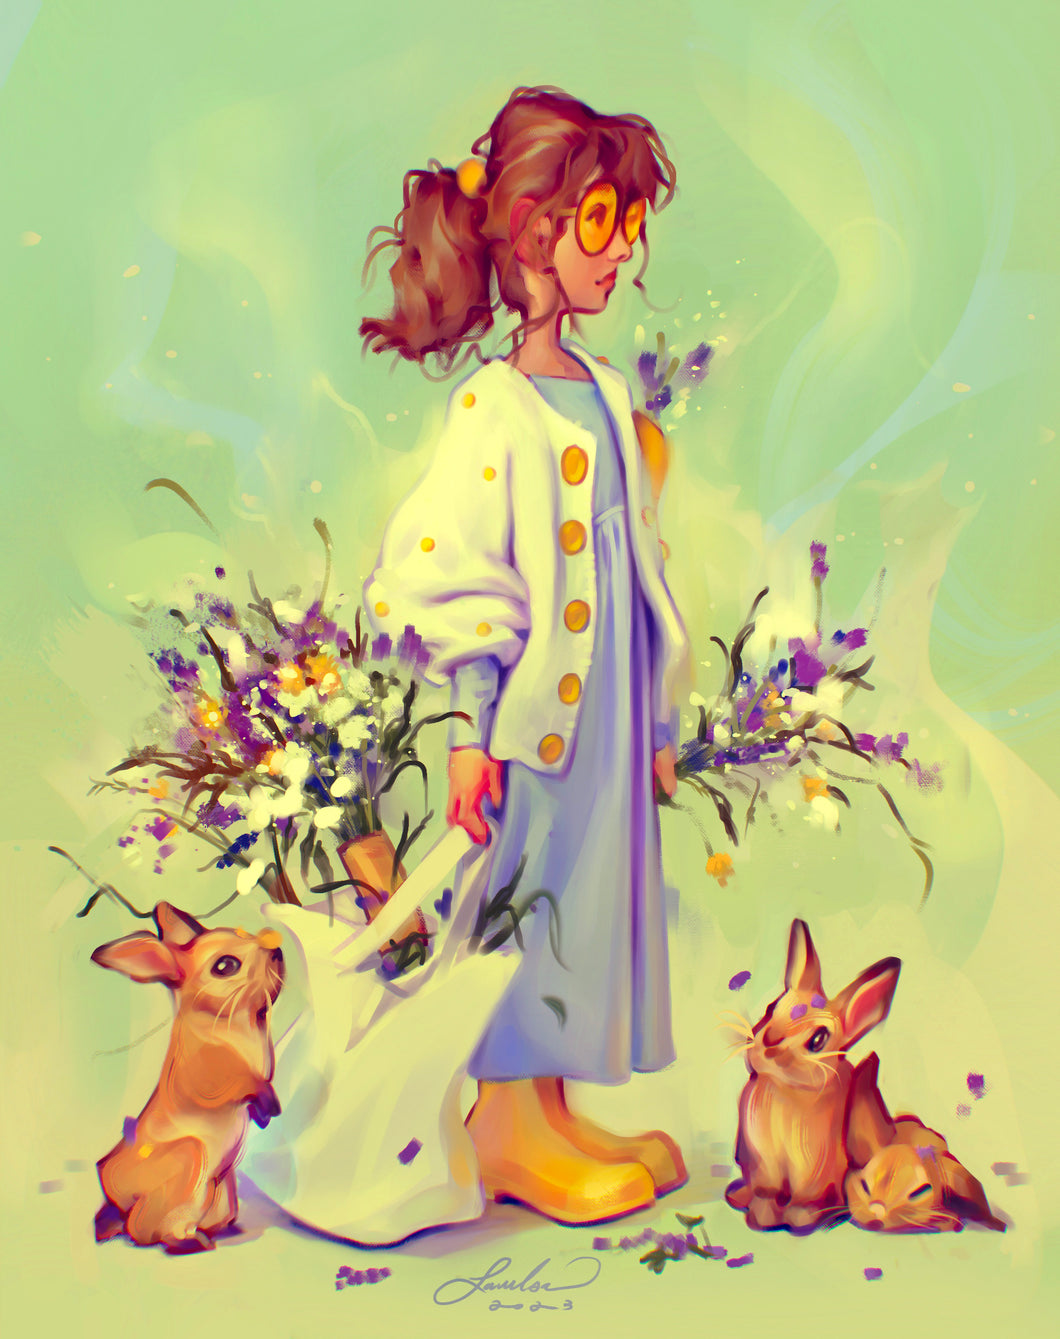 *PREORDER* Bunny Girl by Lavilsa